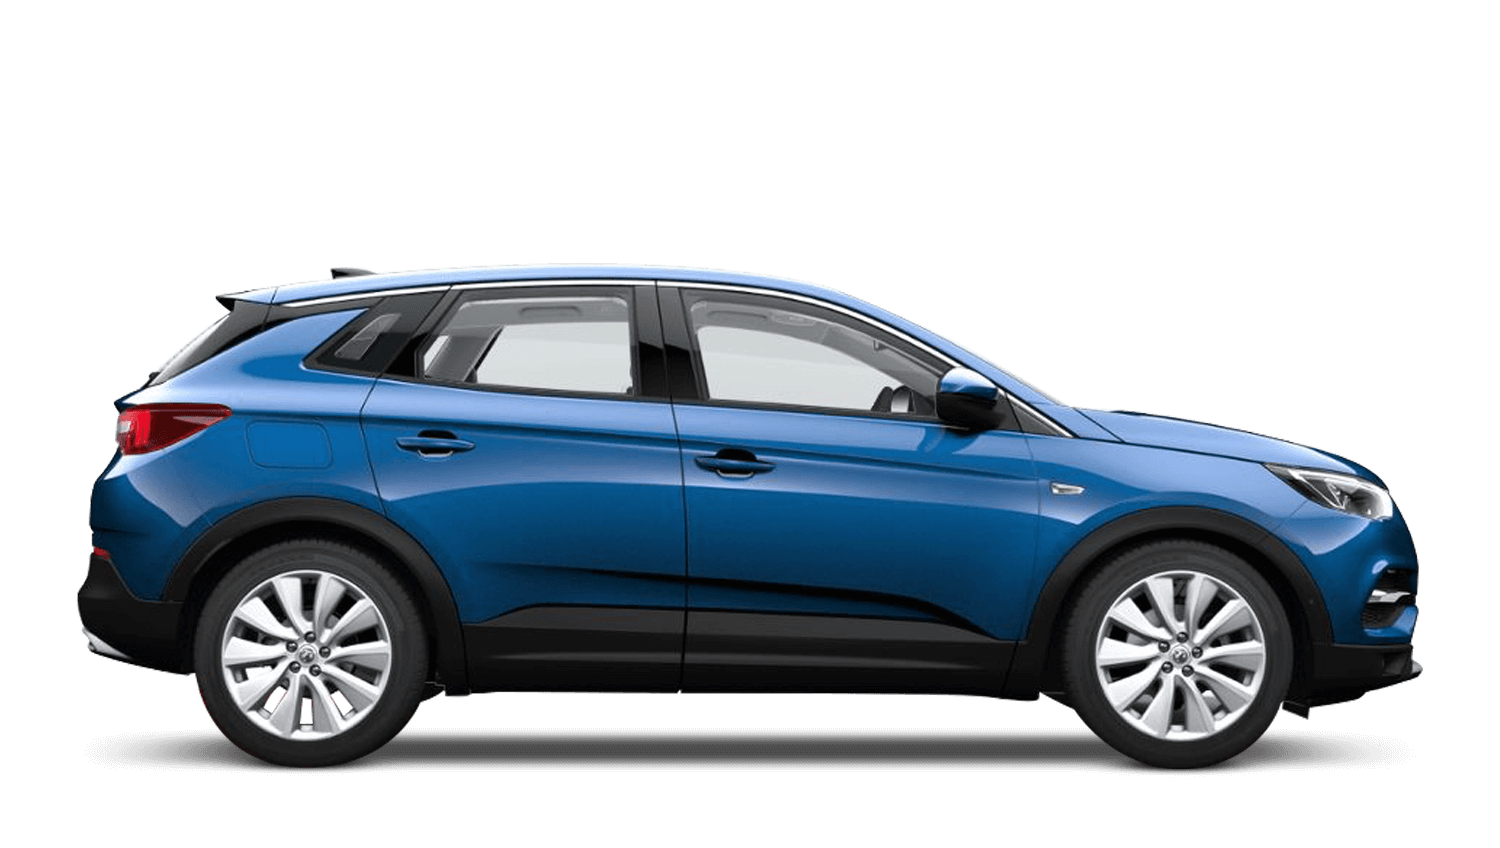 Afbeelding van L166BN, blauwe Opel Grandland X mpv